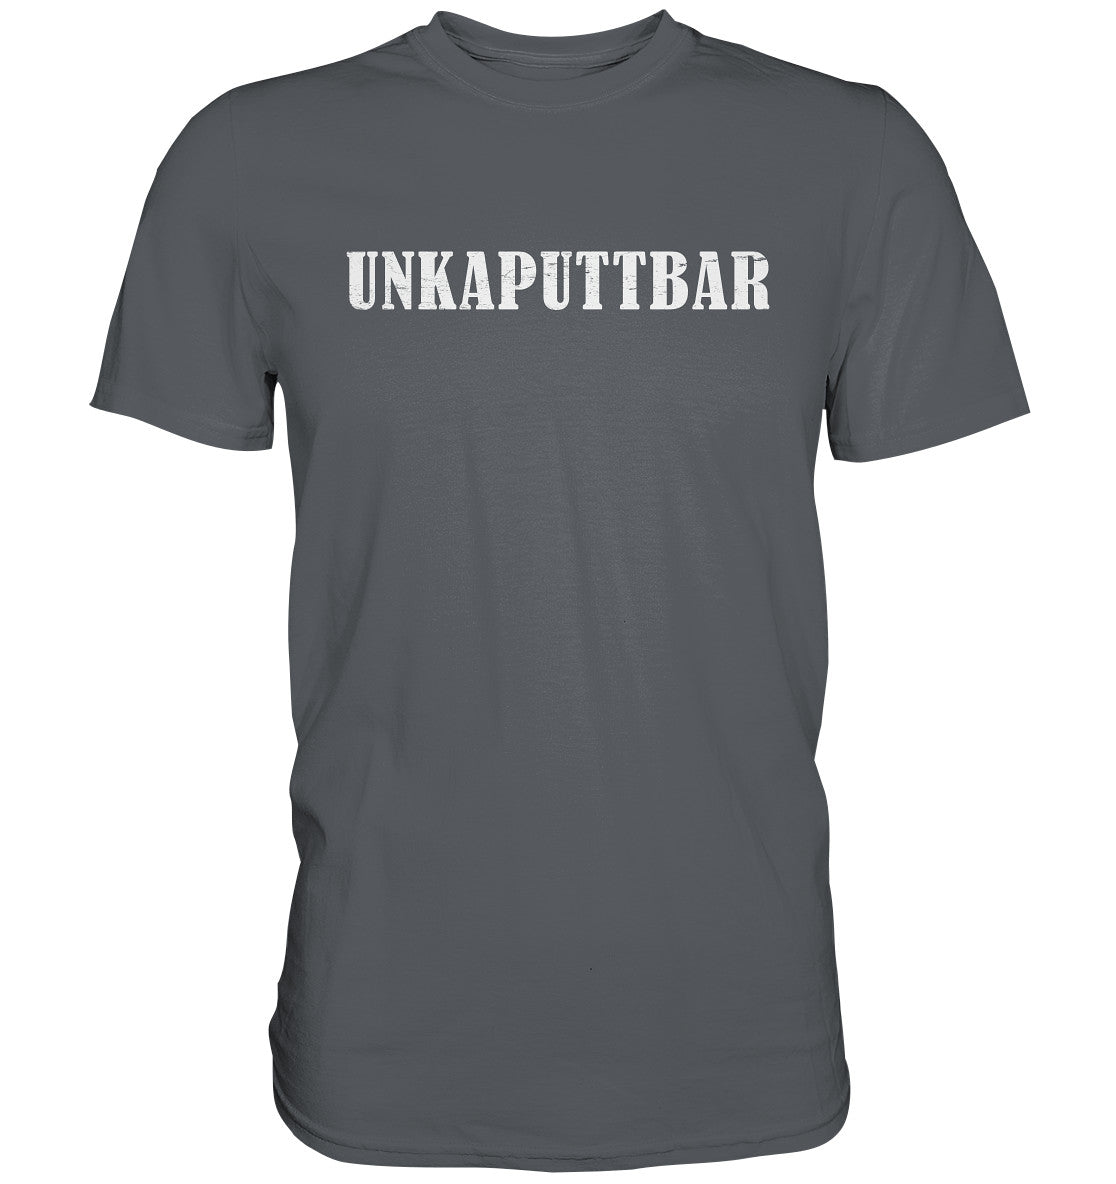 Unkaputtbar - Premium Shirt